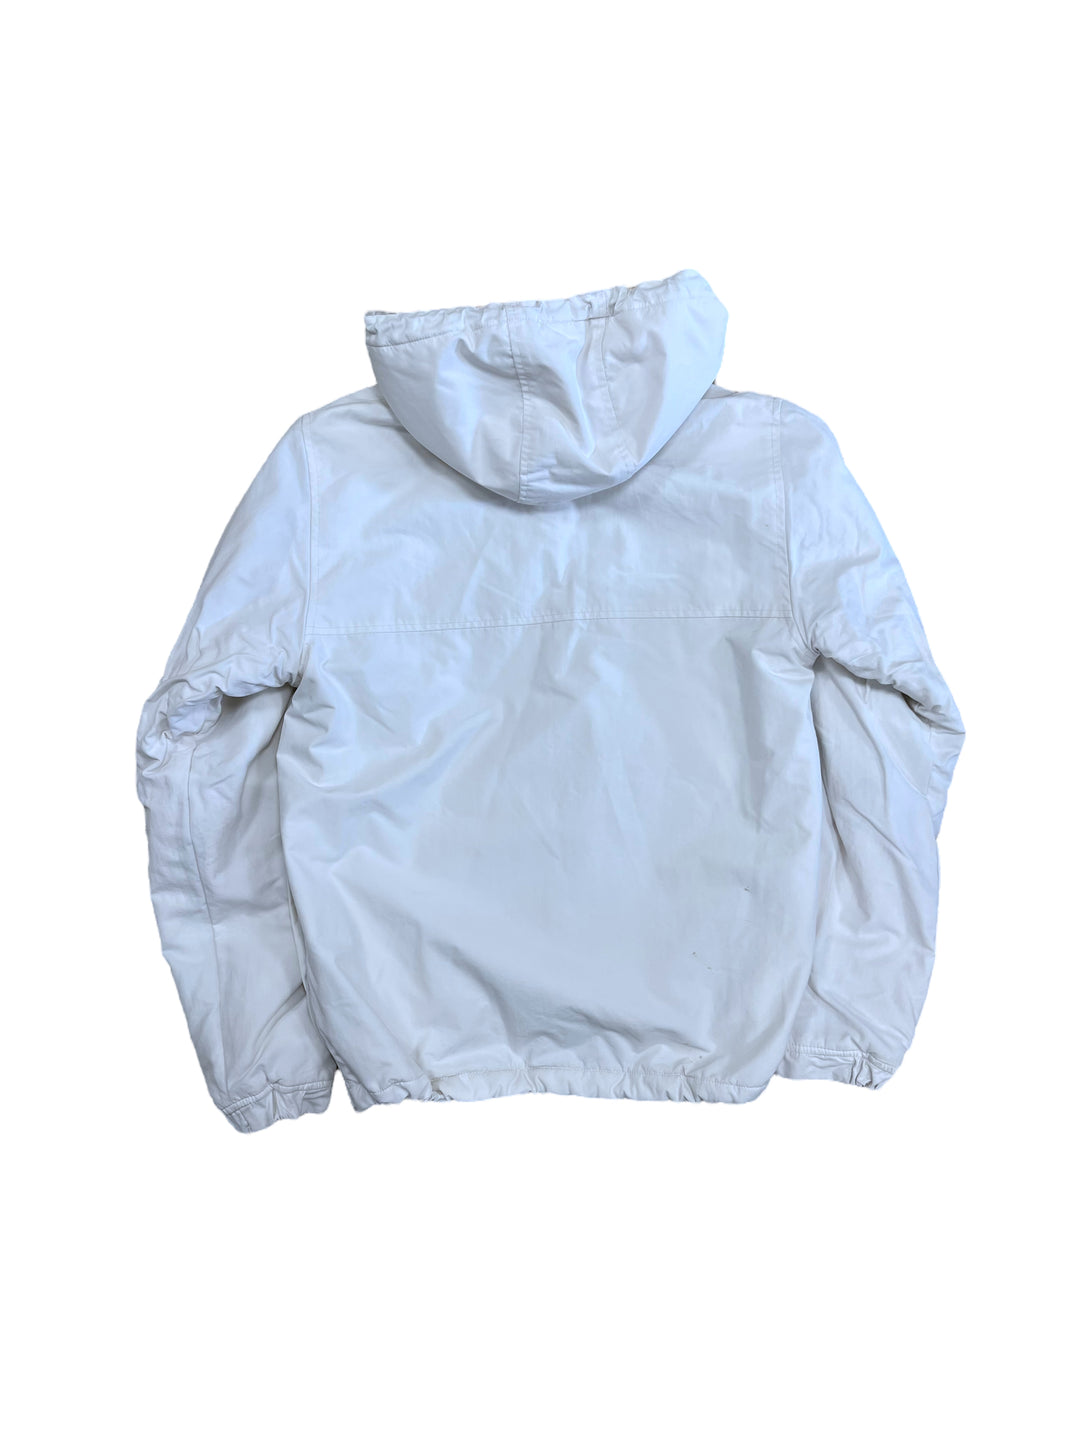 Carhartt Windbreaker Hooded Jacket Men’s Small